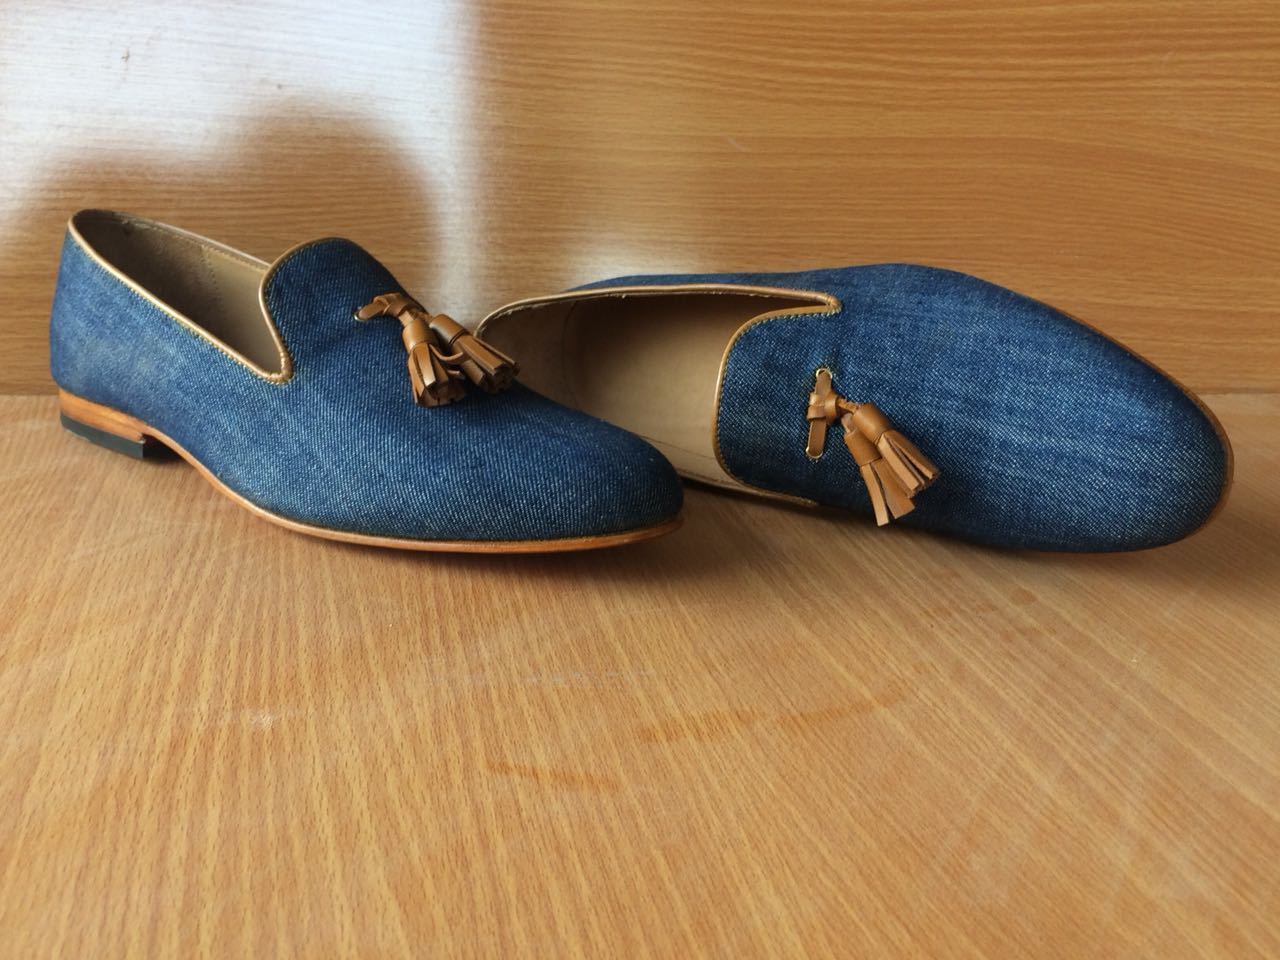 NEW Handmade Men's Blue Jeans Fabric Loafers shoes, Men's Slip On Tussles Dress